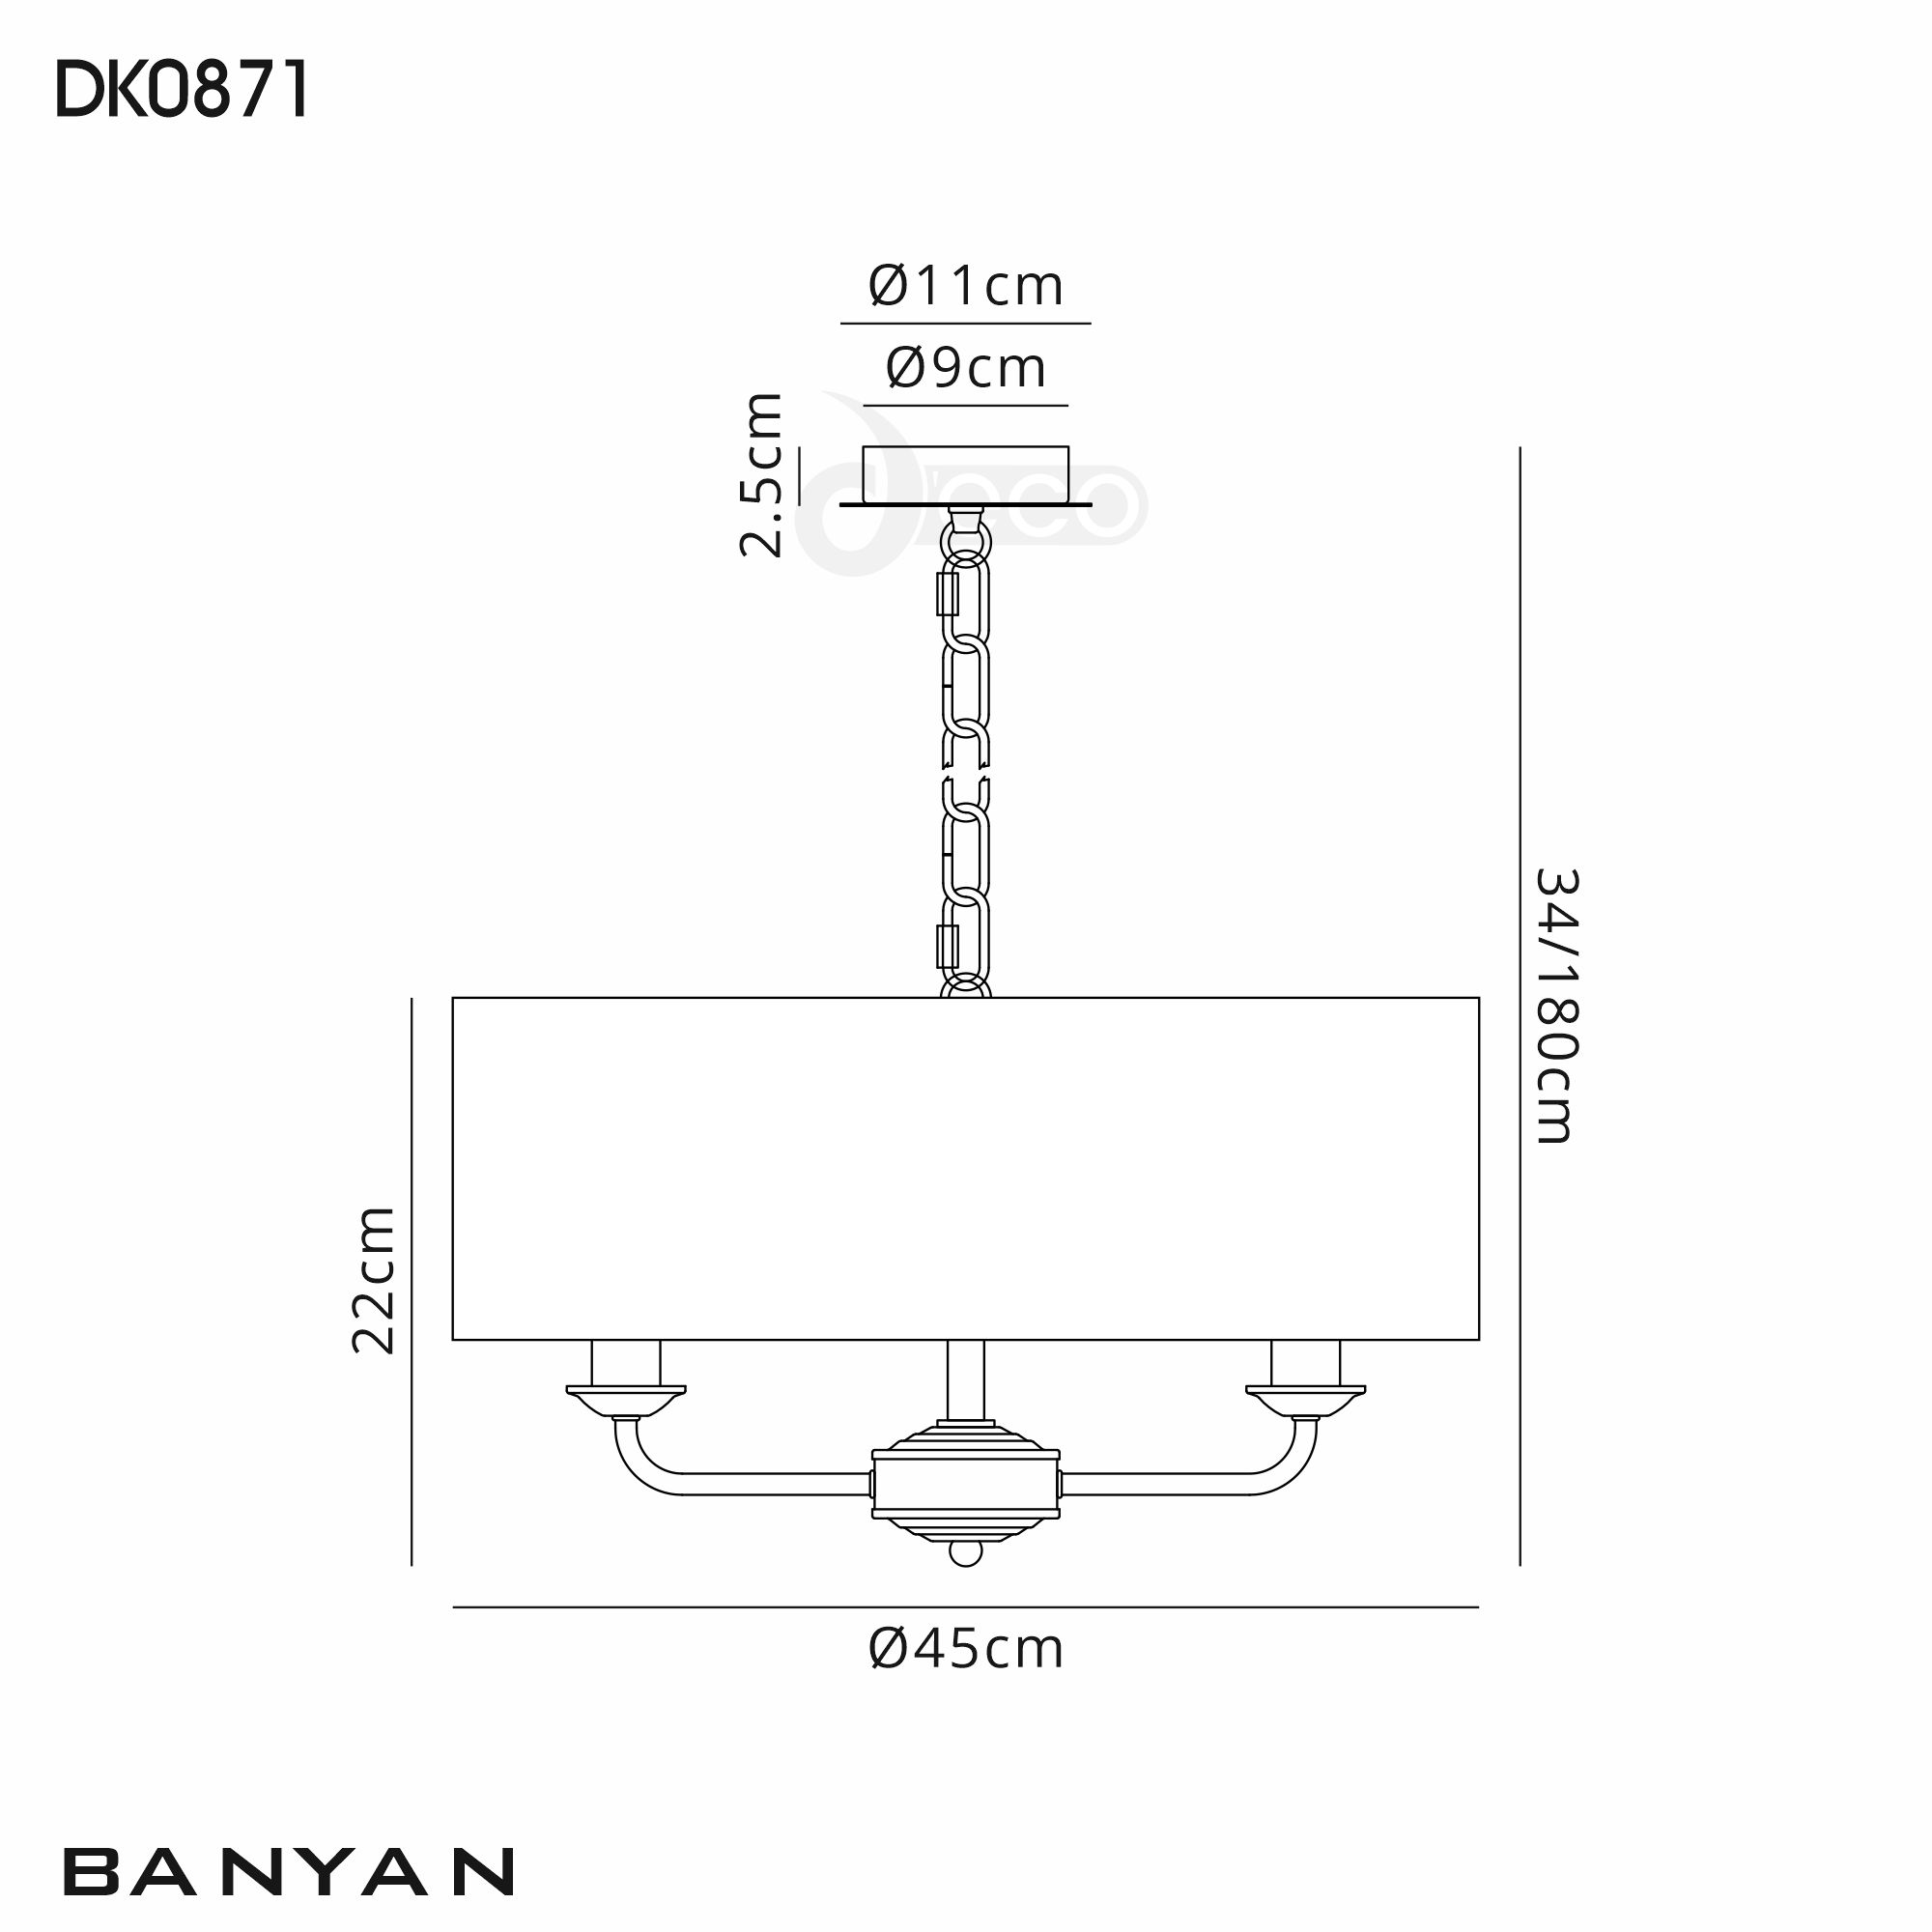 DK0871  Banyan 45cm 3 Light Pendant Polished Chrome, Black